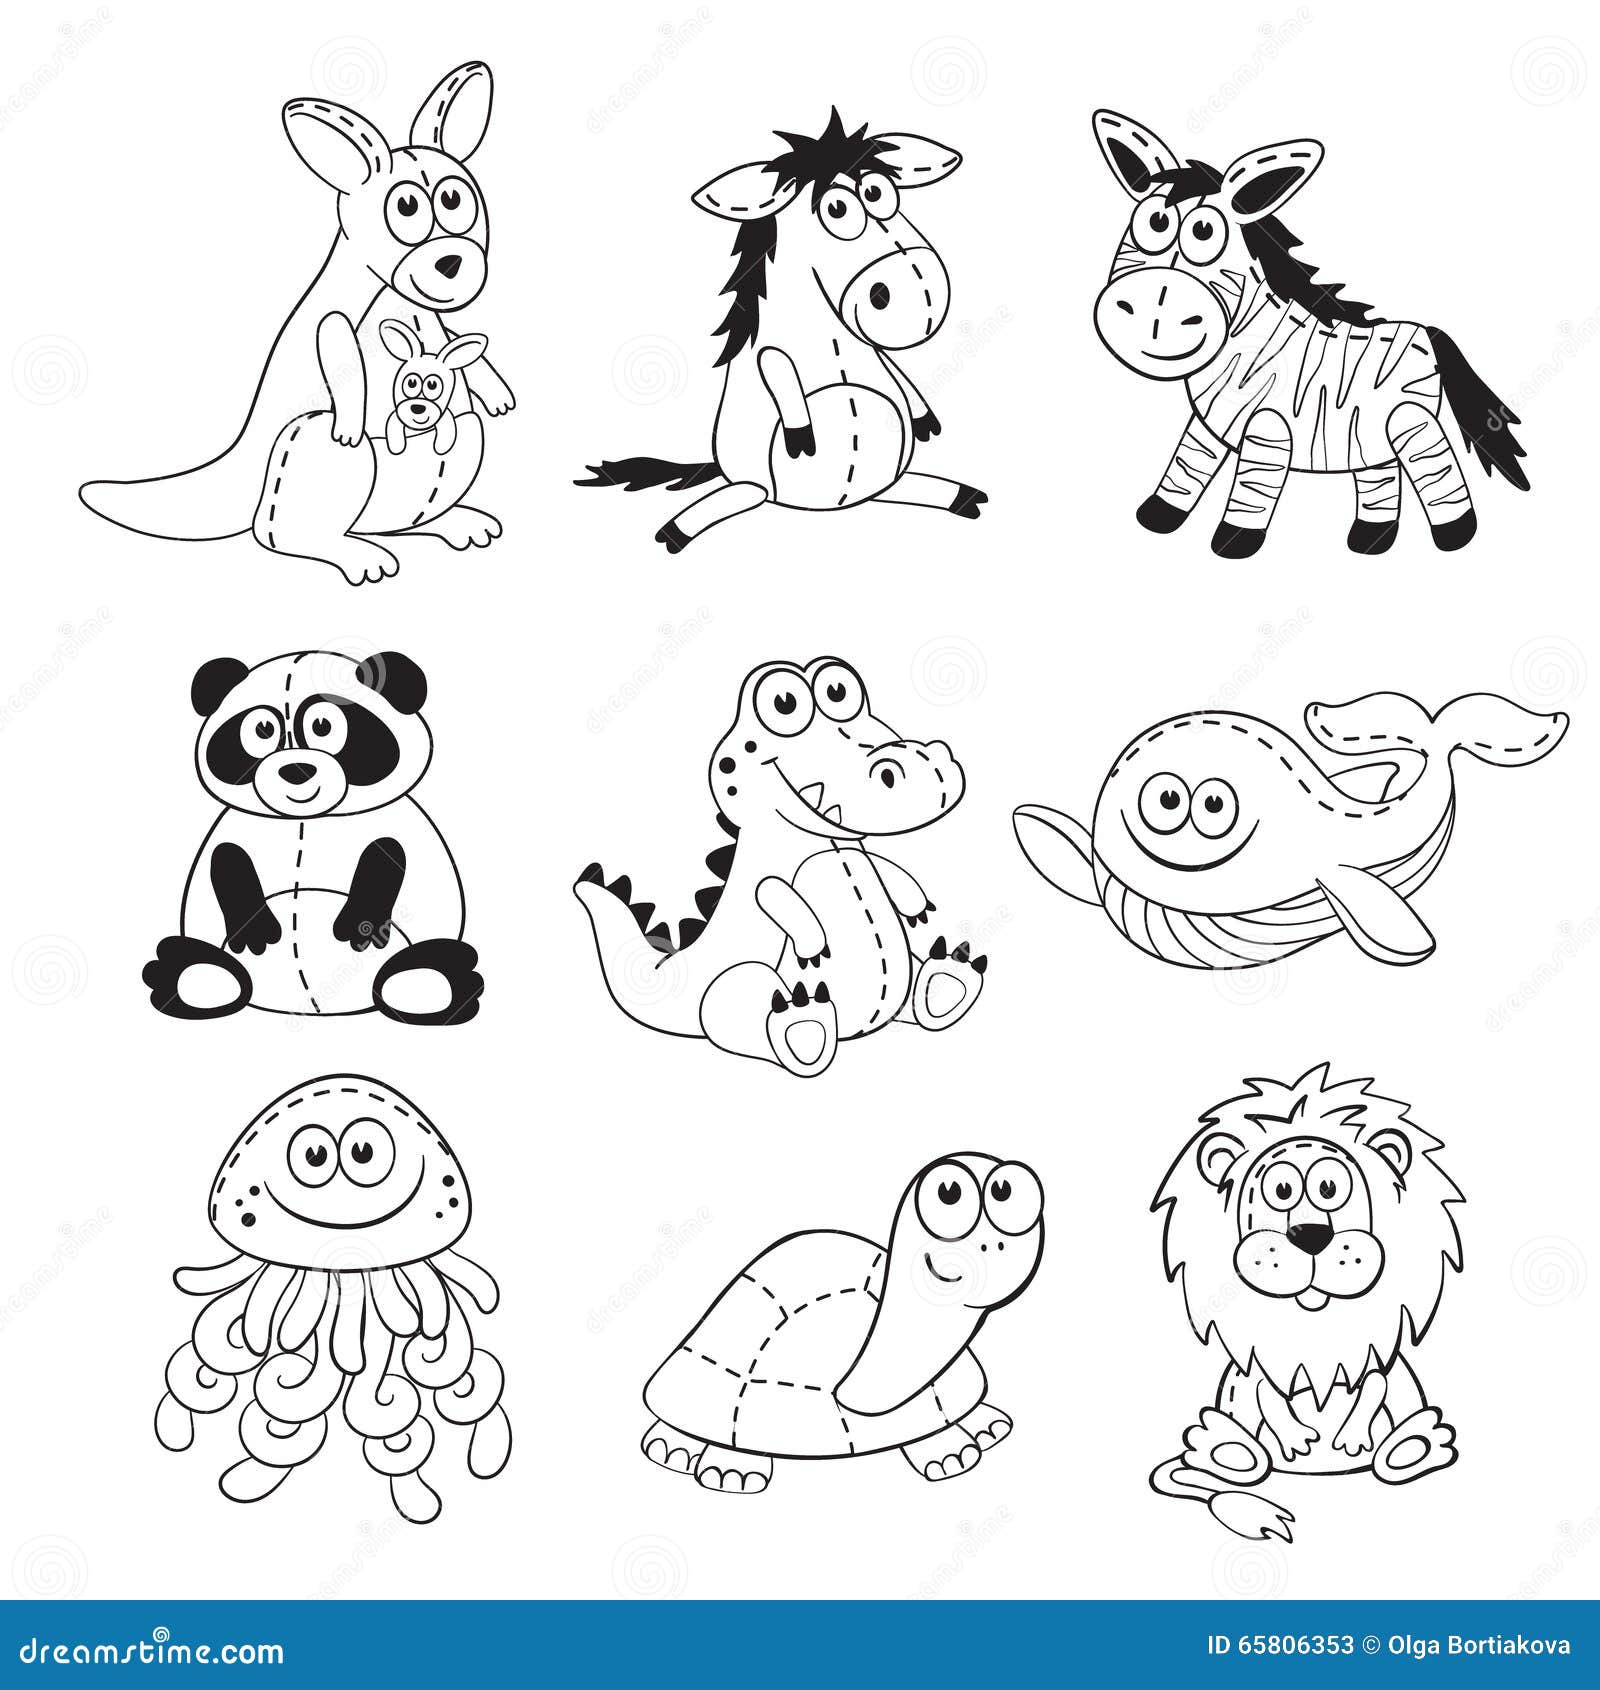 Cartoon Animals Outlines Stock Vector - Image: 65806353